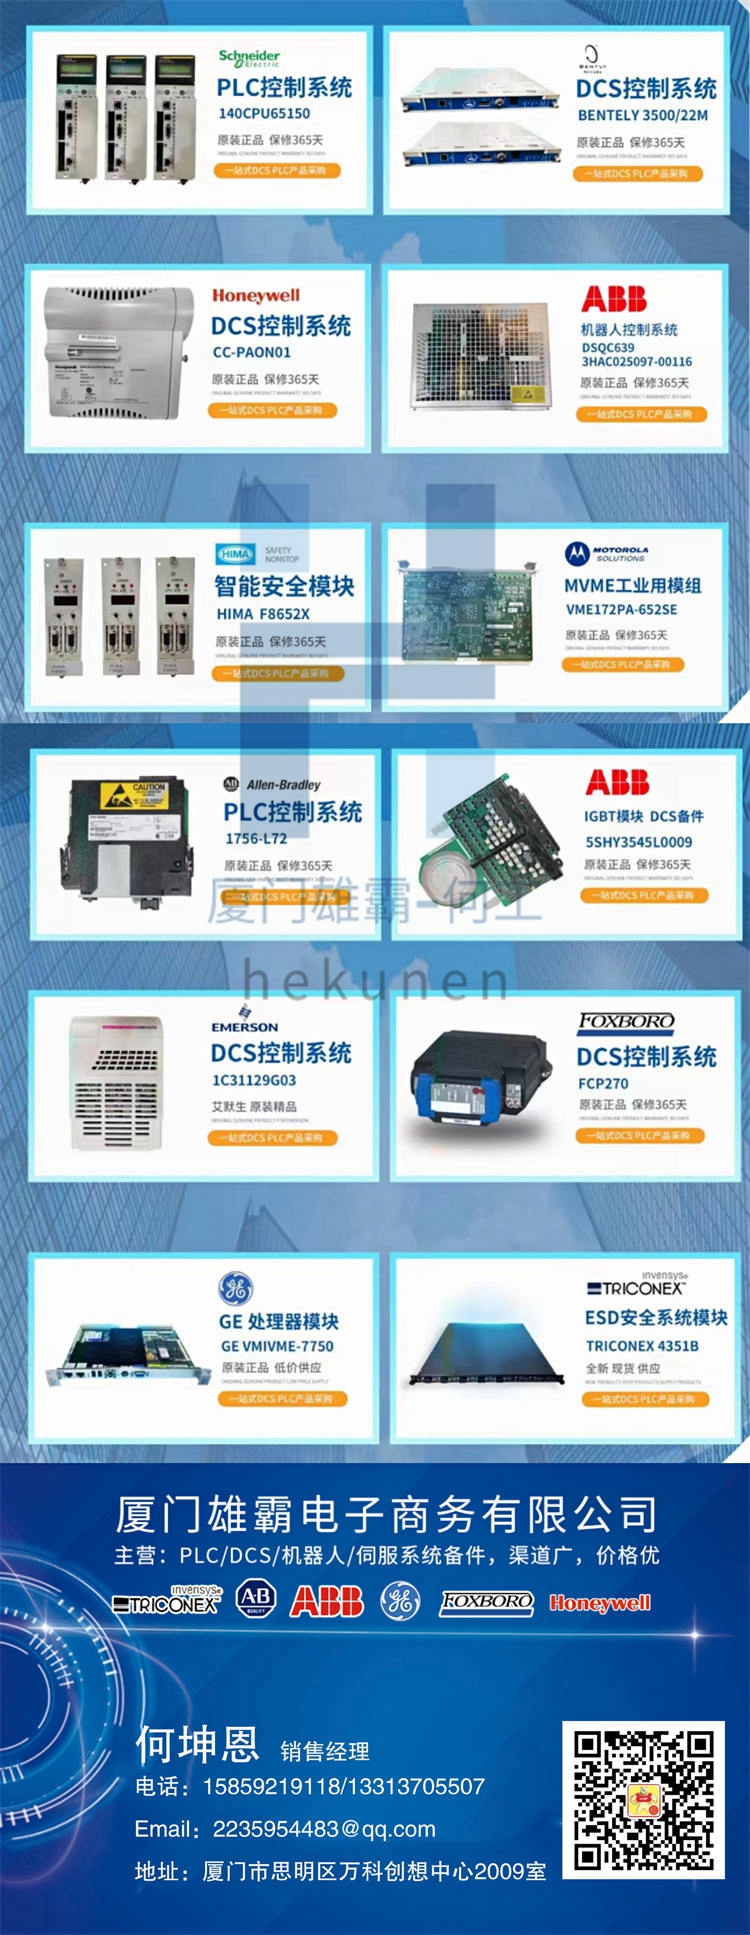 CI855 PLC控制器ABB 输入输出模块-备件销售 